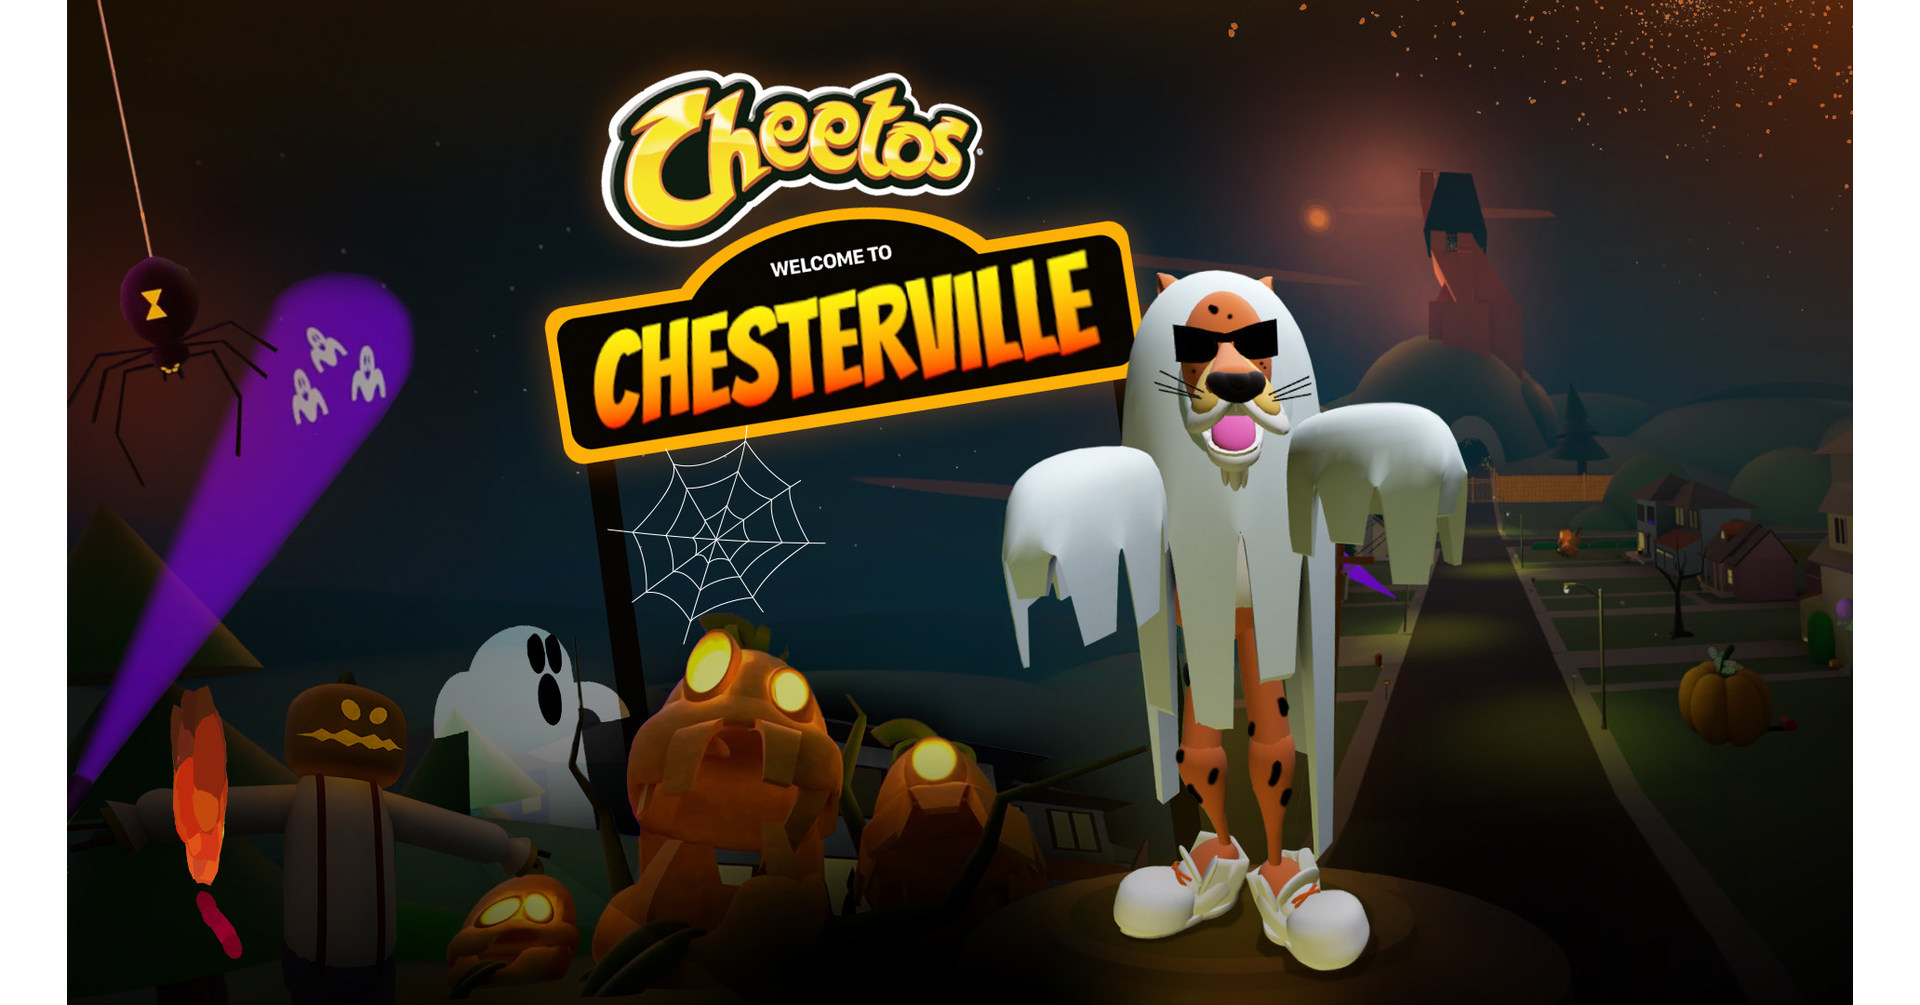 Chester Cheetah (@cheetos) • Instagram photos and videos